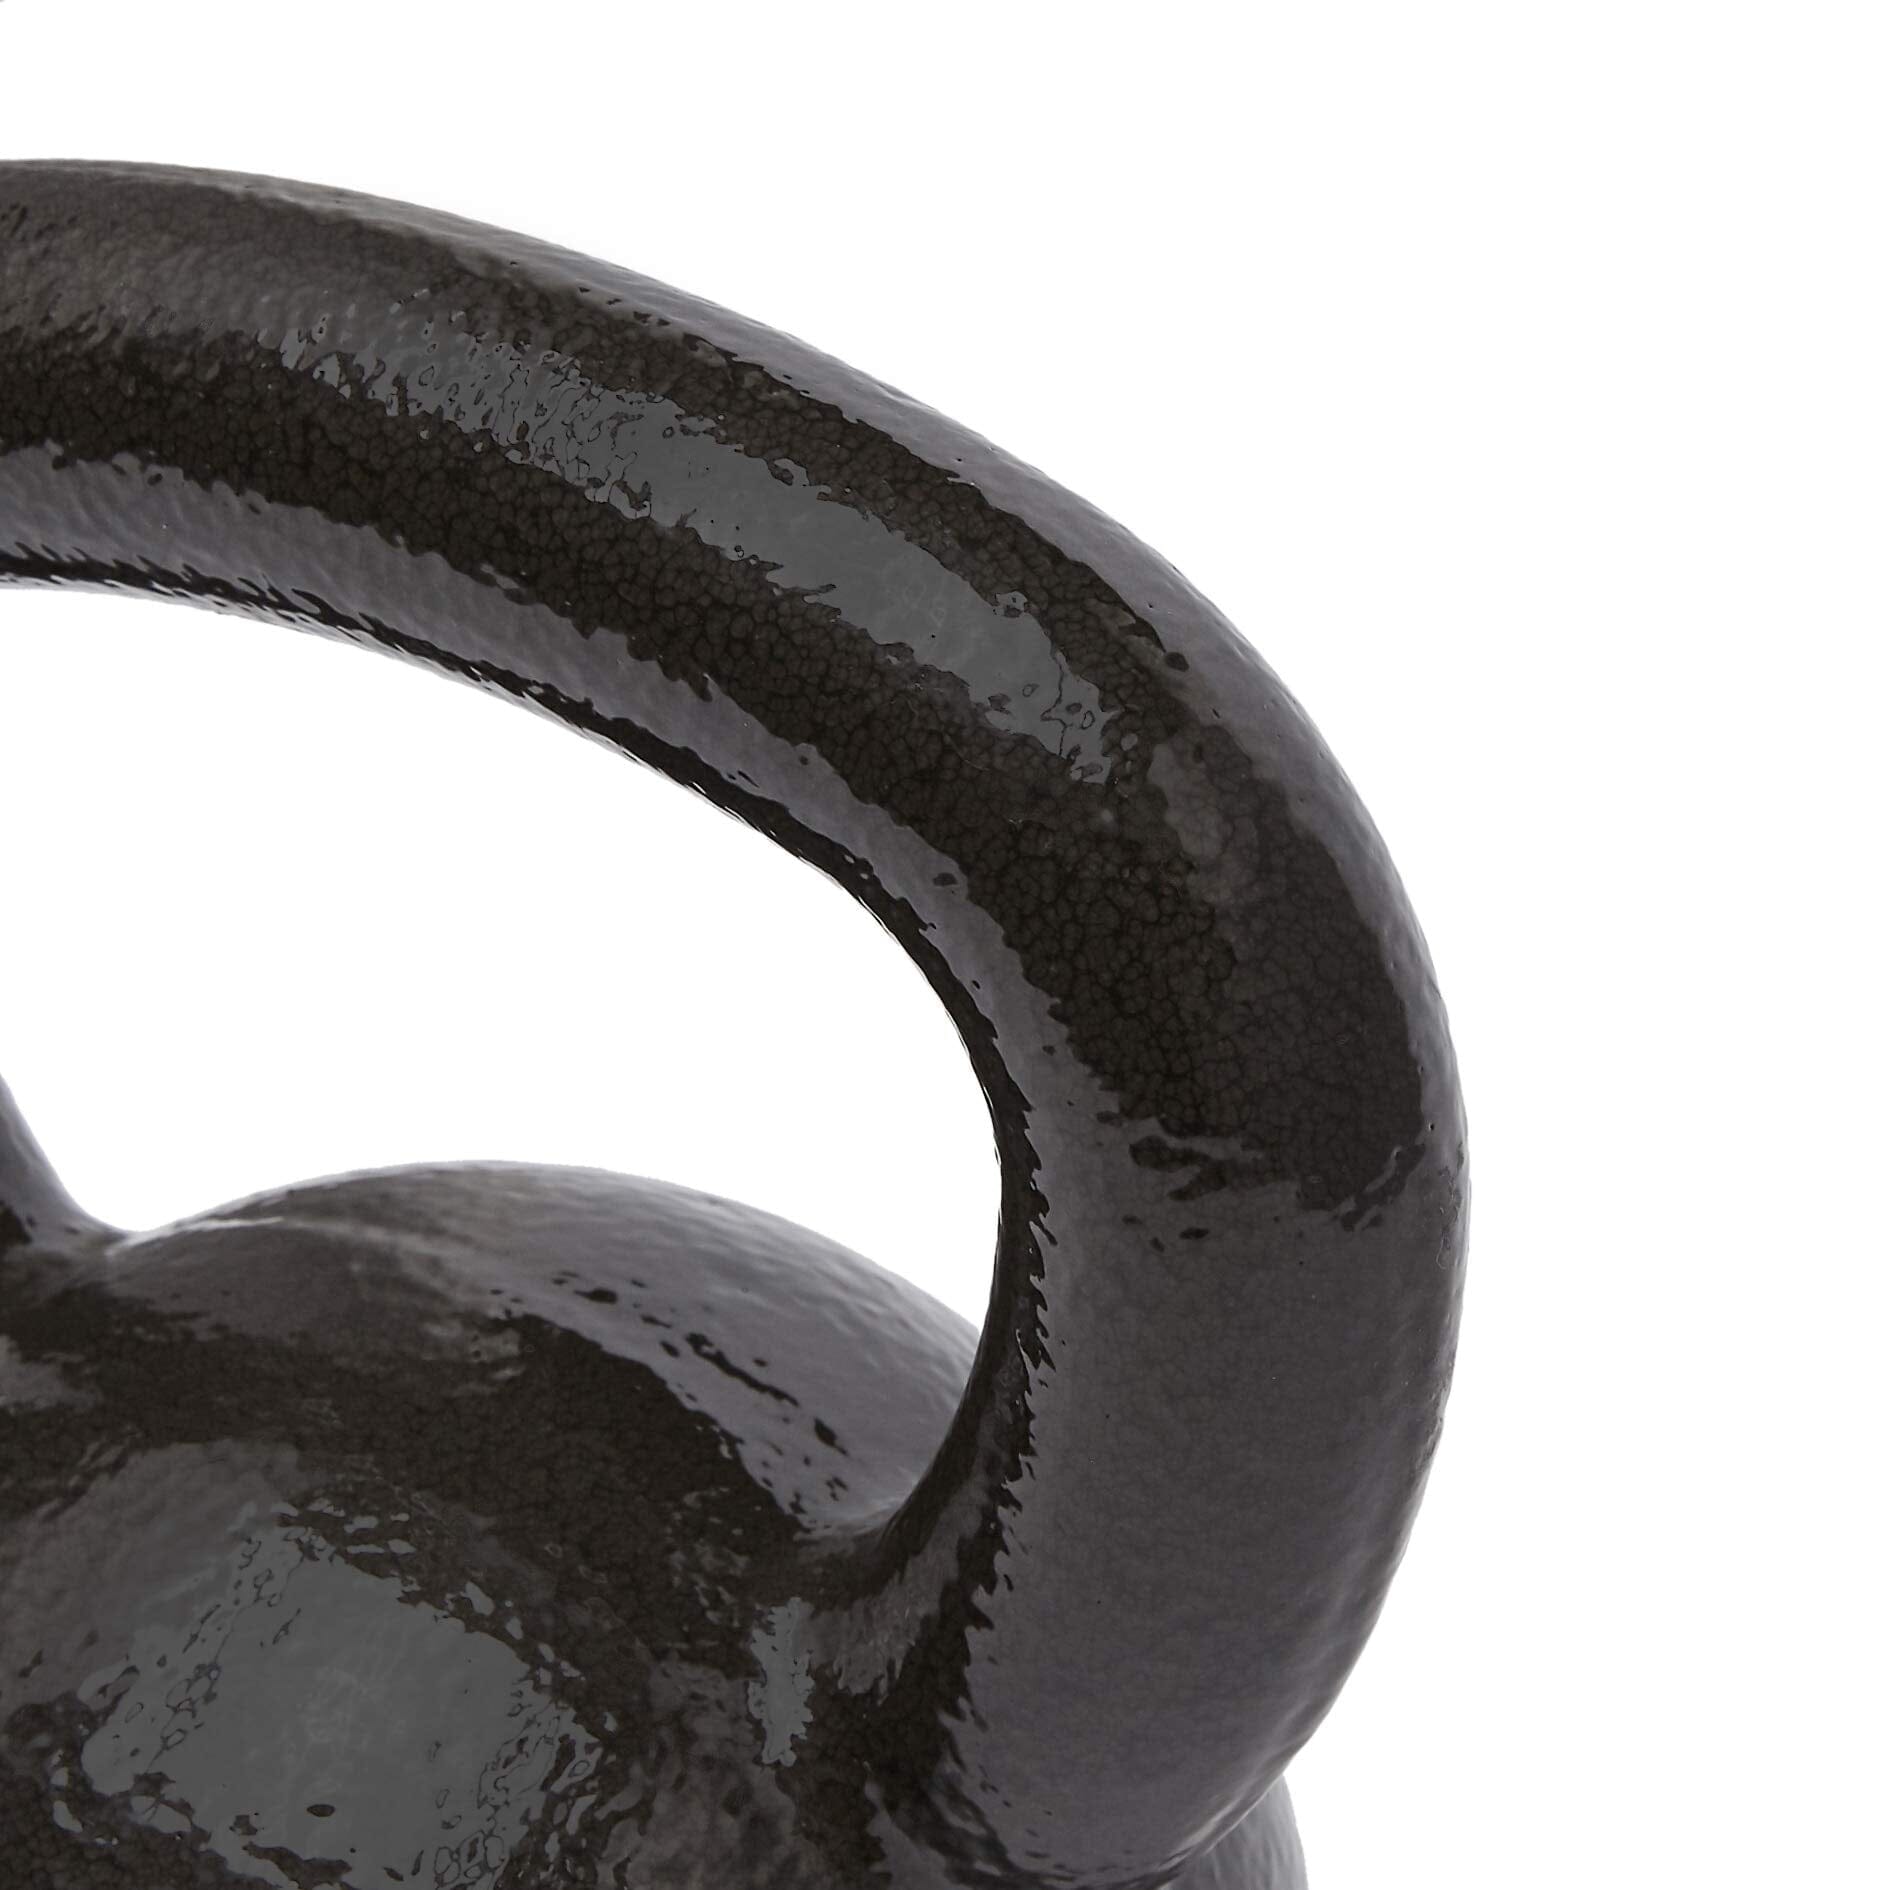 Amazon Basics Cast Iron Kettlebell with Enamel Finish, 35-Pound, Black Kettlebell Amazon Basics 